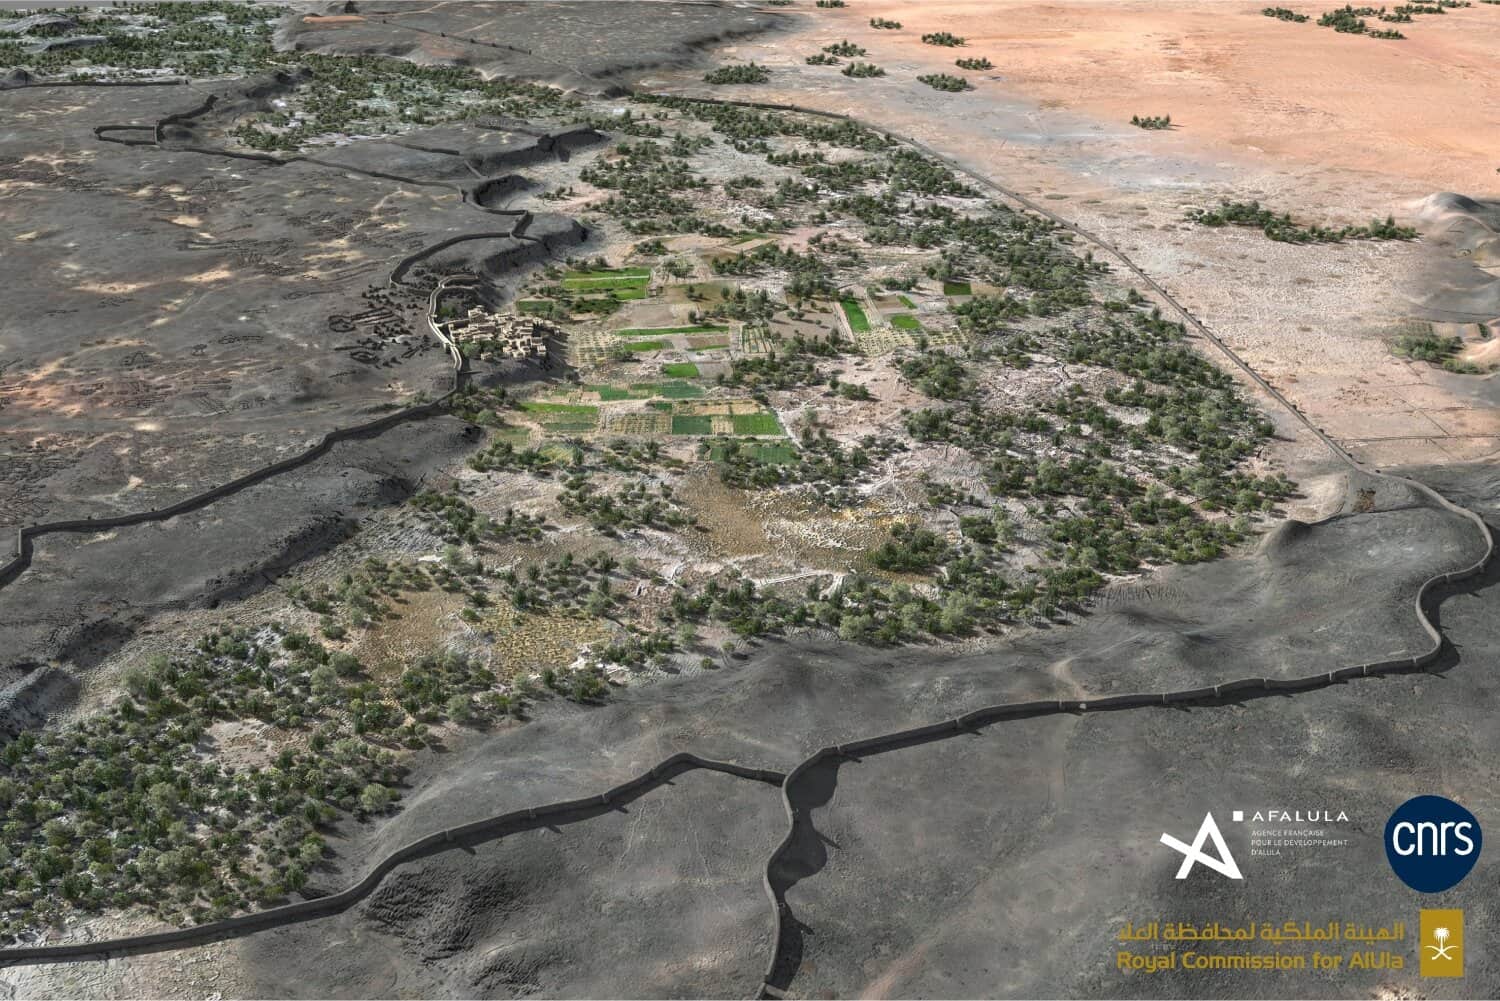 Digital reconstruction of the Khaybar Oasis